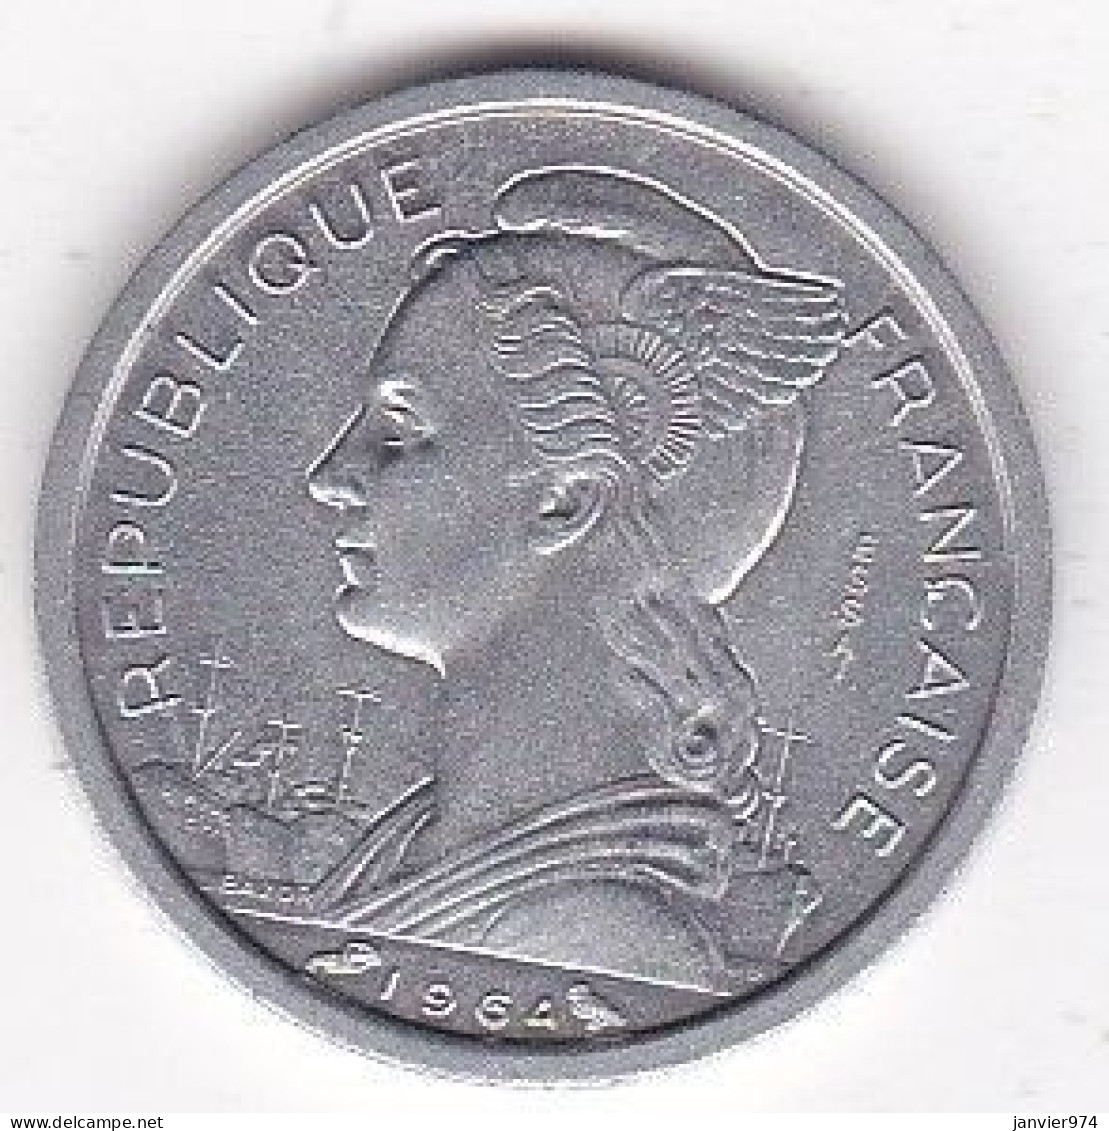 Archipel Des Comores , Republique Française 1 Franc 1964 ESSAI , En Aluminium LEC# 32, UNC - Comore